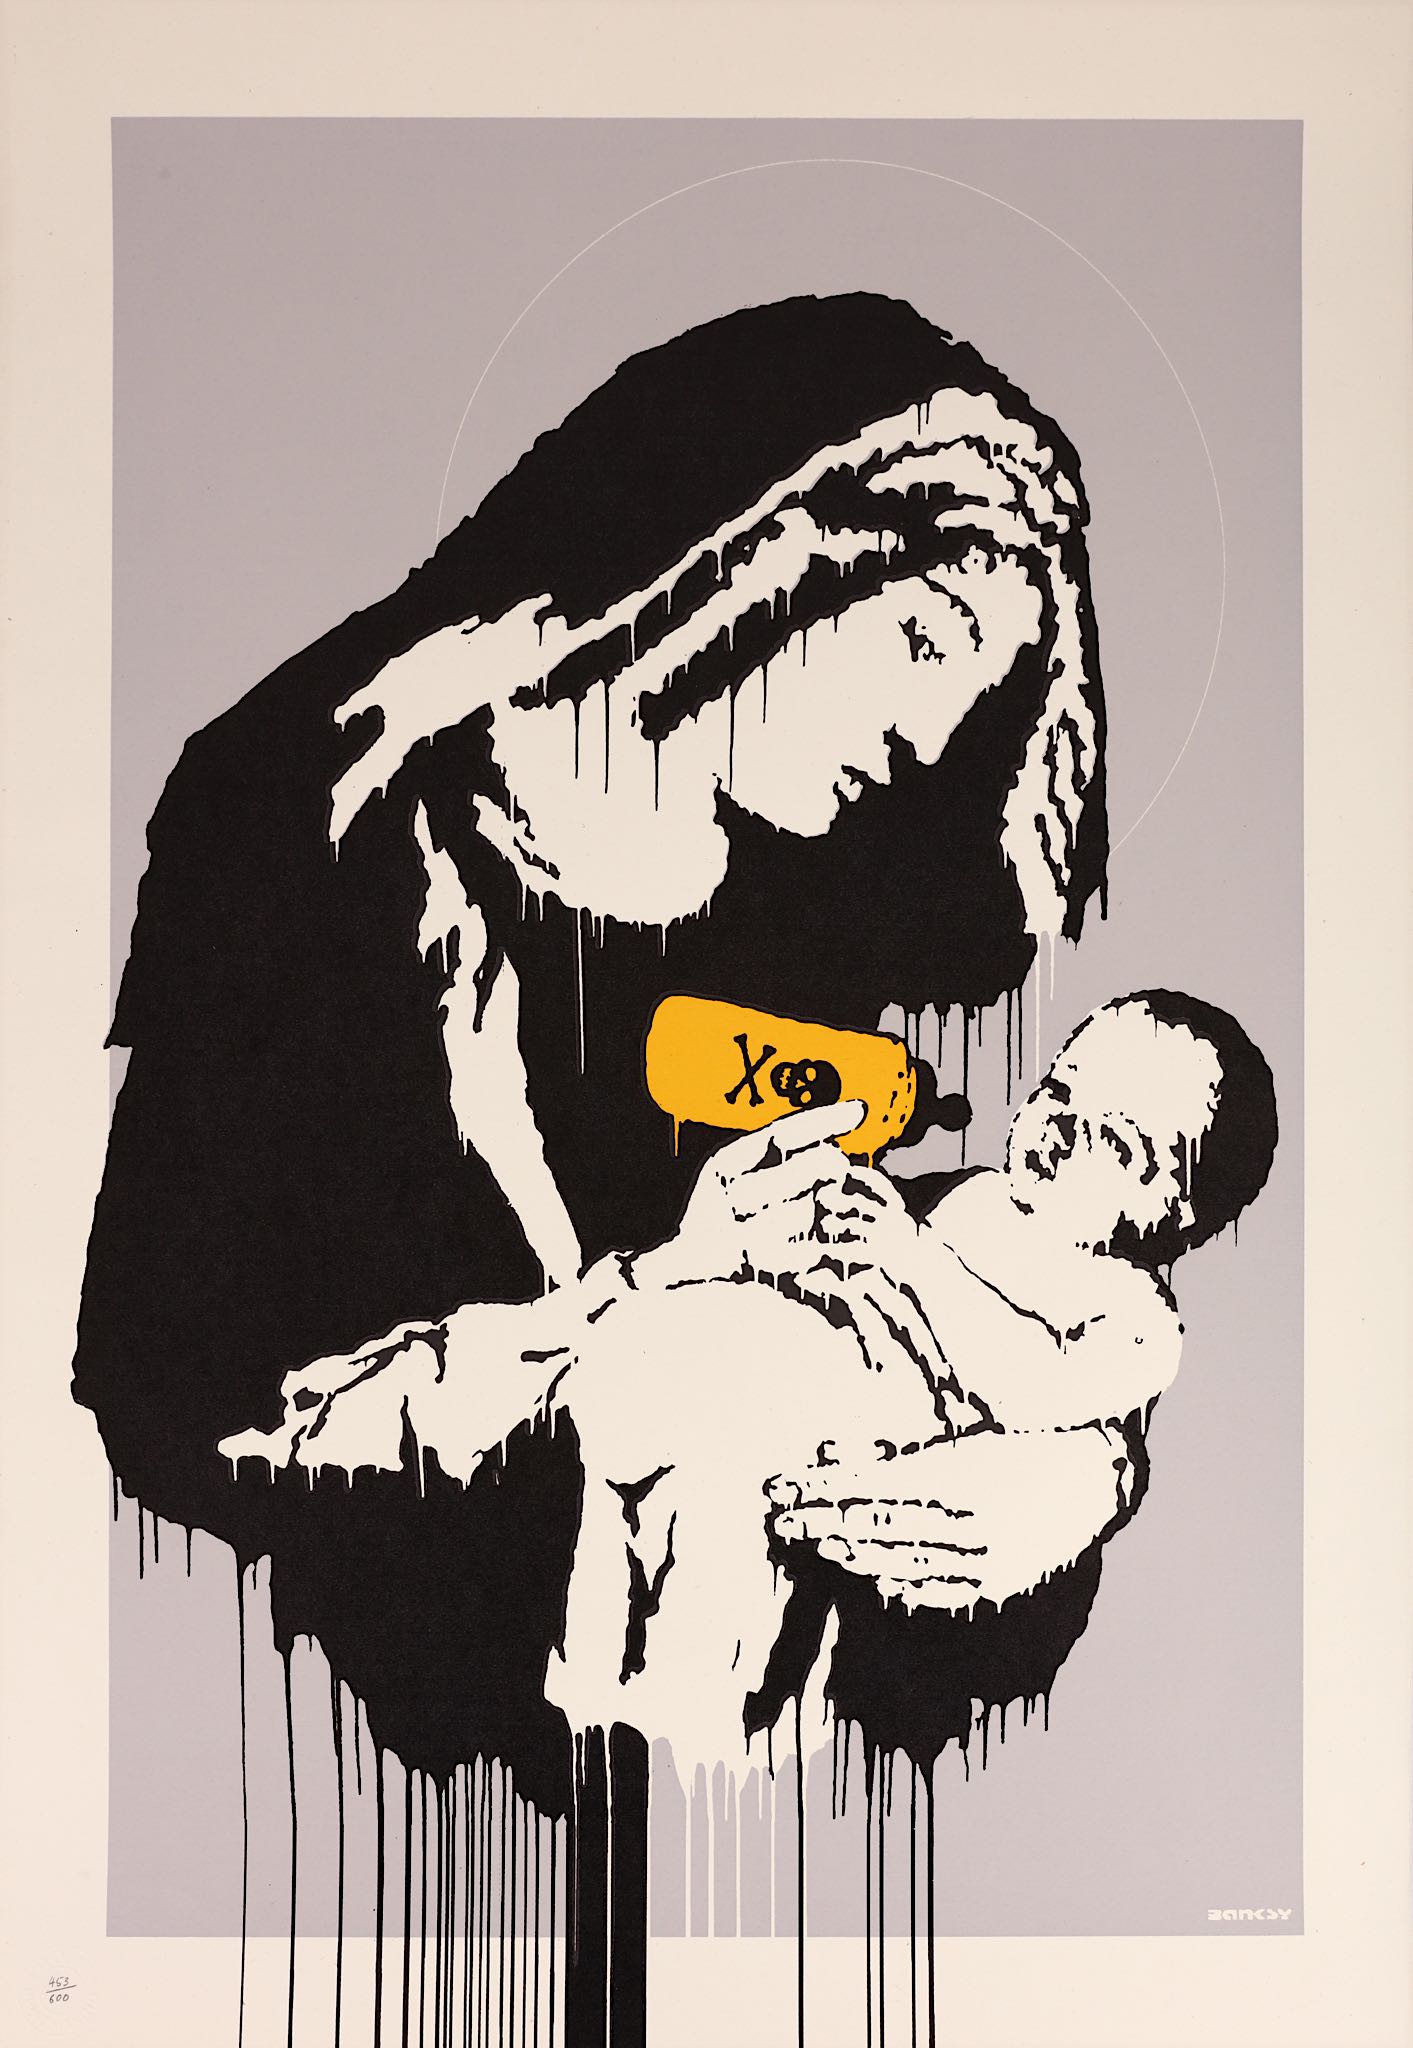 Banksy (British b.1974), 'Toxic Mary', 2004, scree